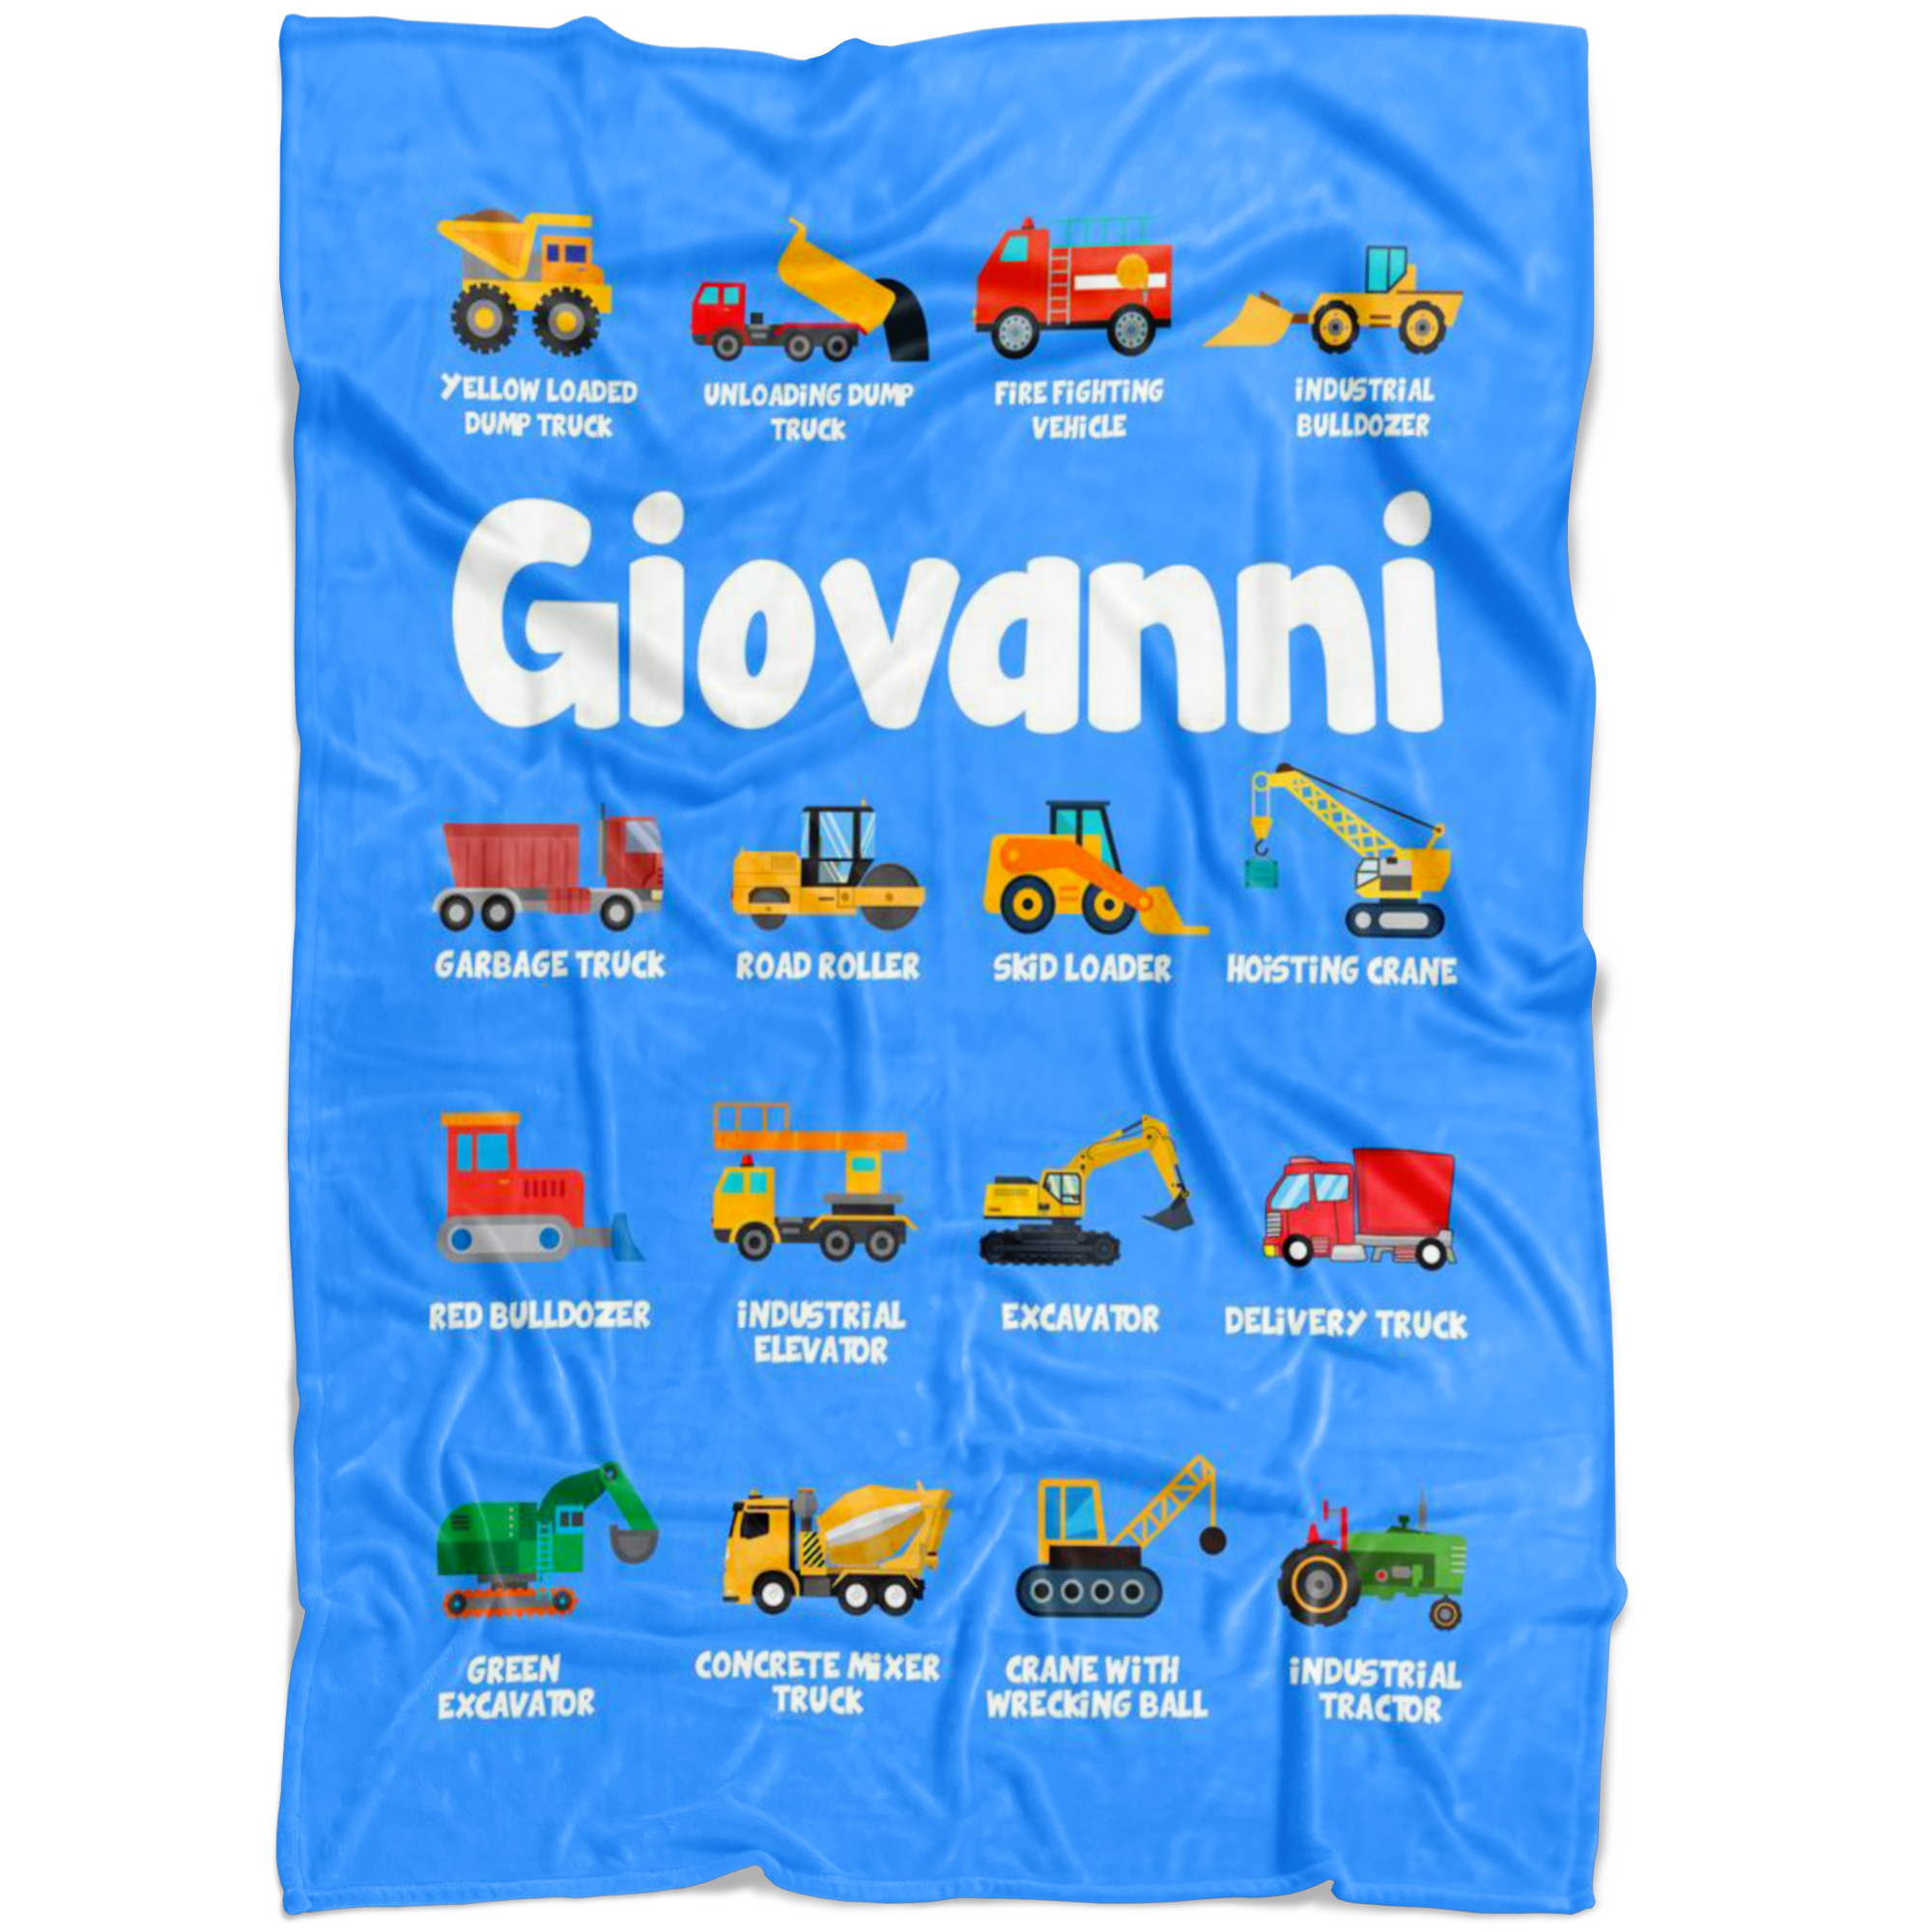 Giovanni Construction Blanket Blue